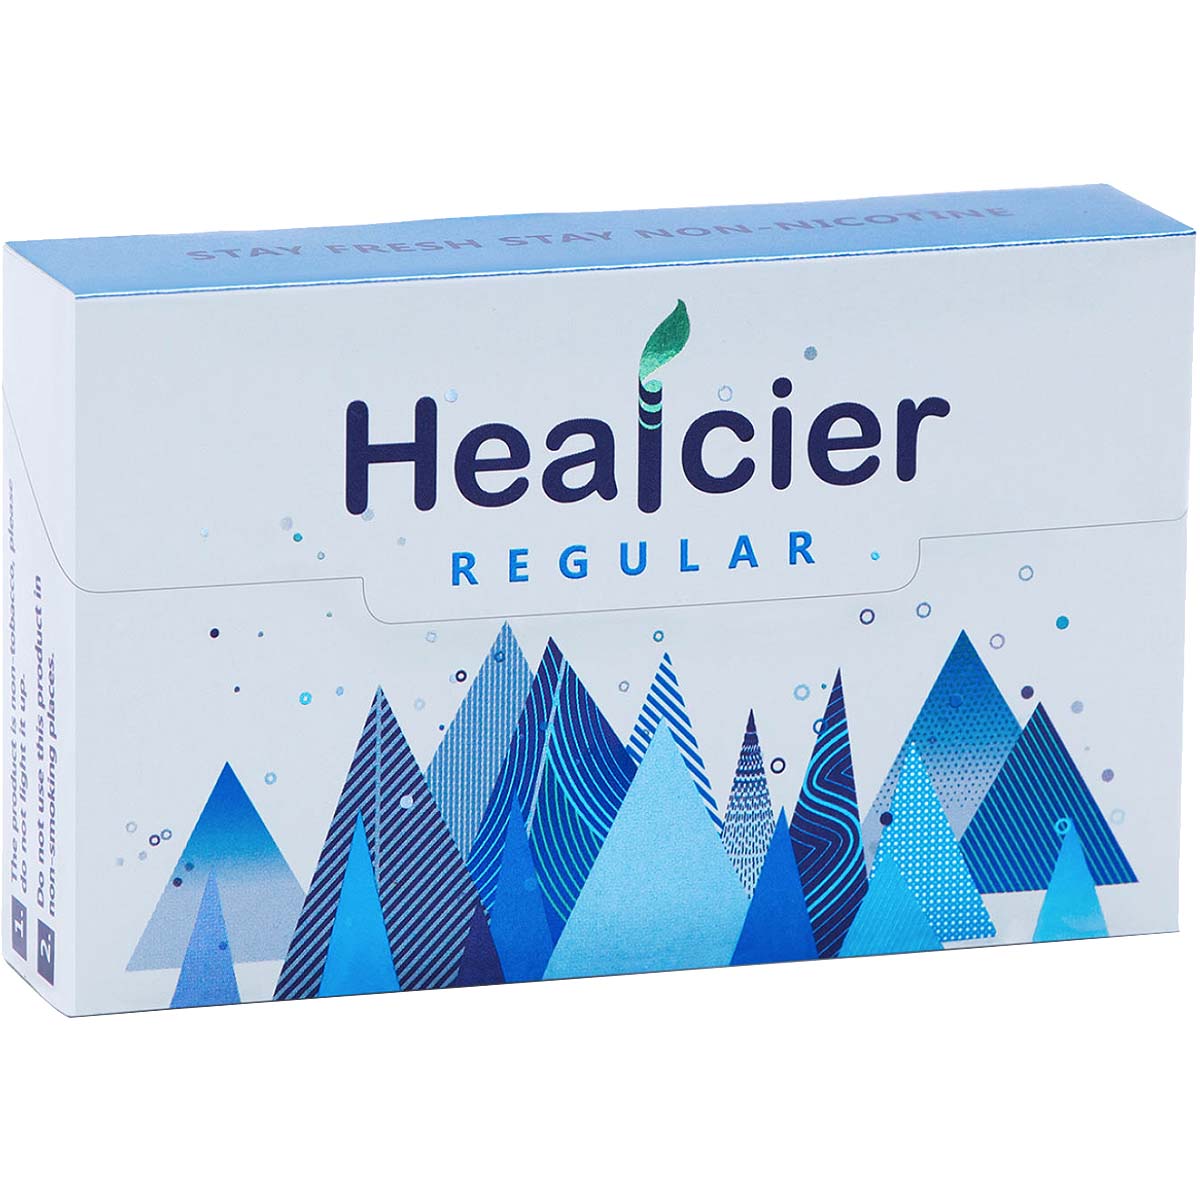 Healcier - Regular Non-Nicotine